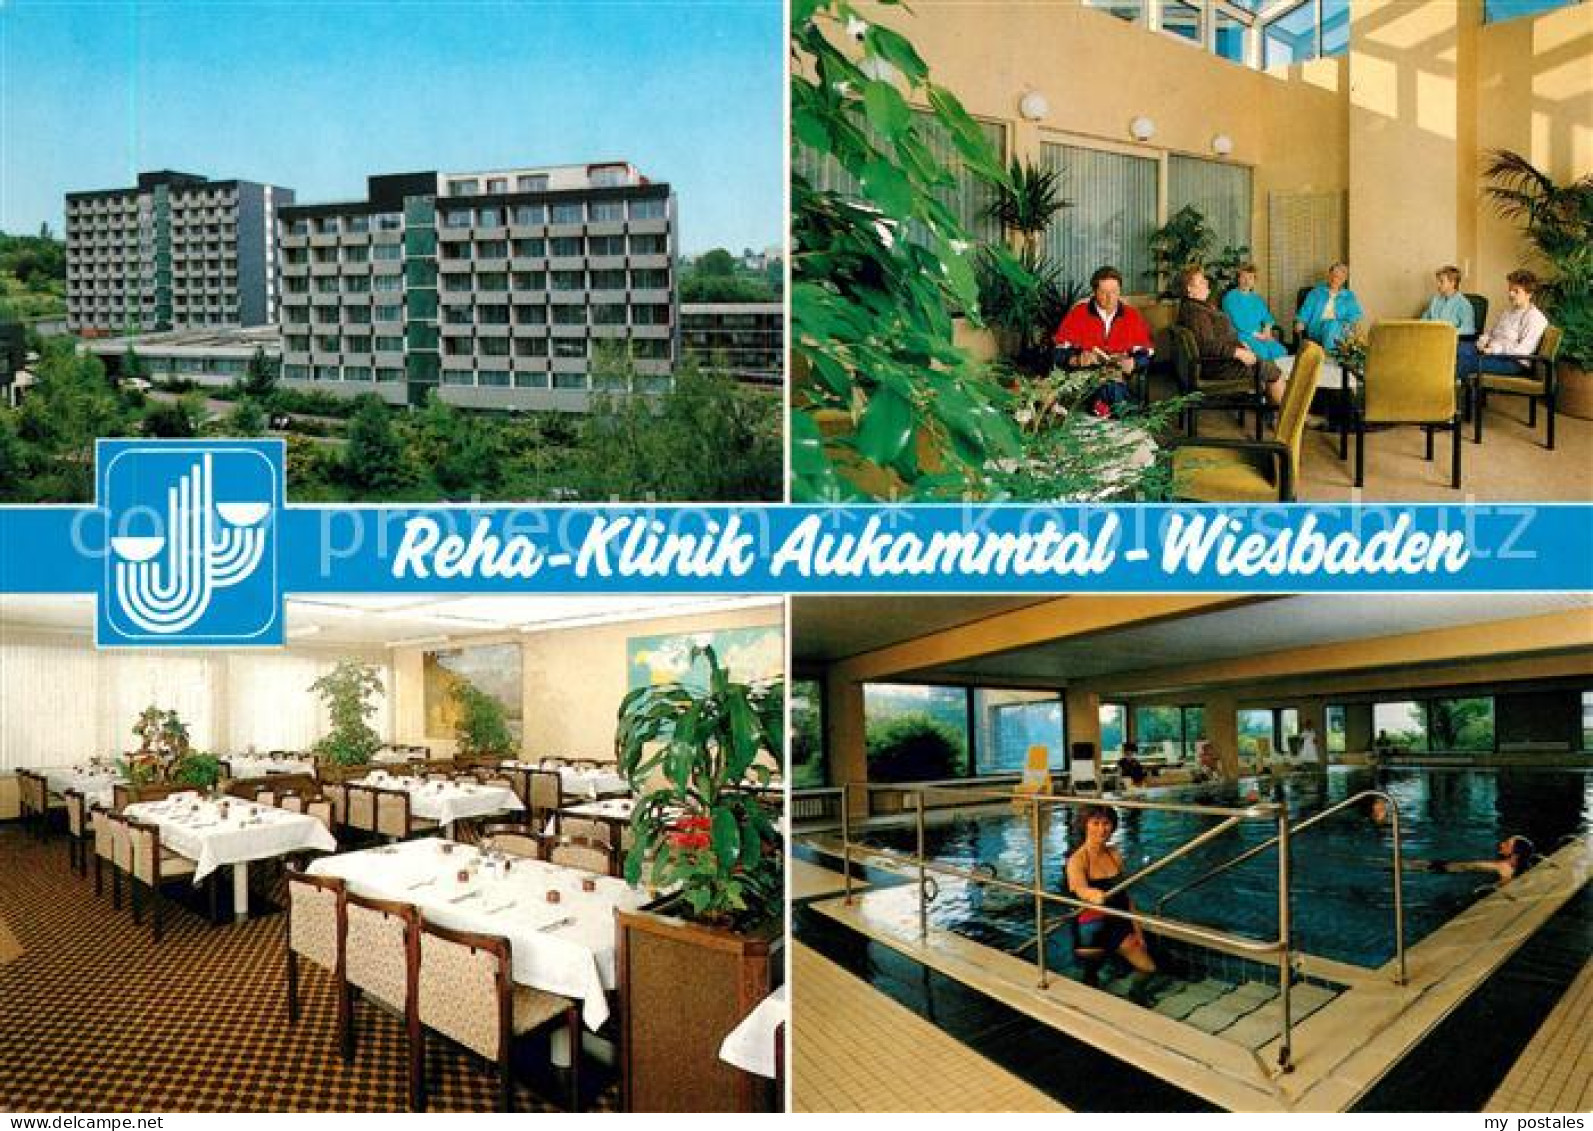 73030481 Wiesbaden Reha Klinik Aukammtal Wiesbaden - Wiesbaden